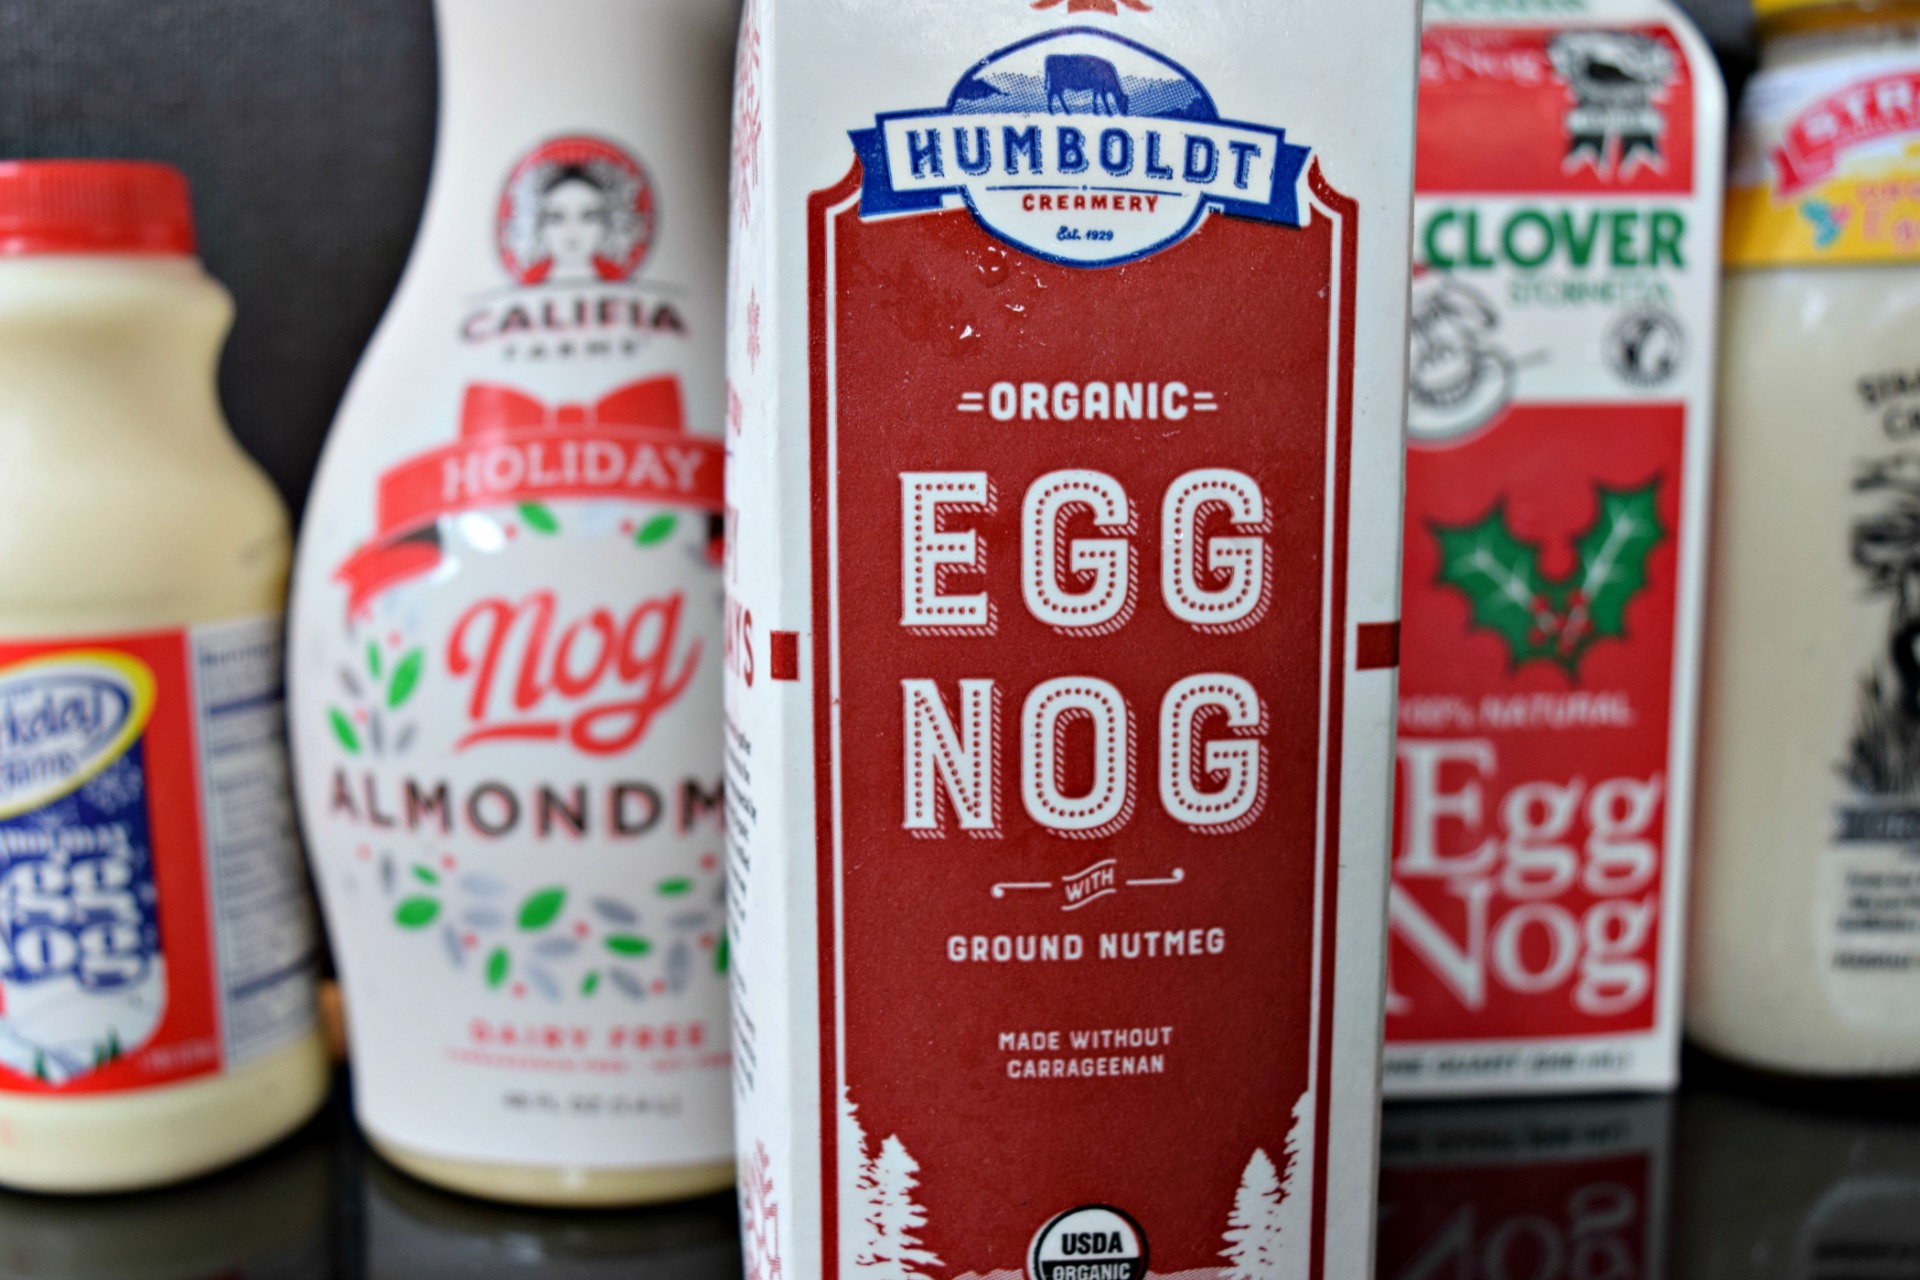 Humboldt Creamery's eggnog